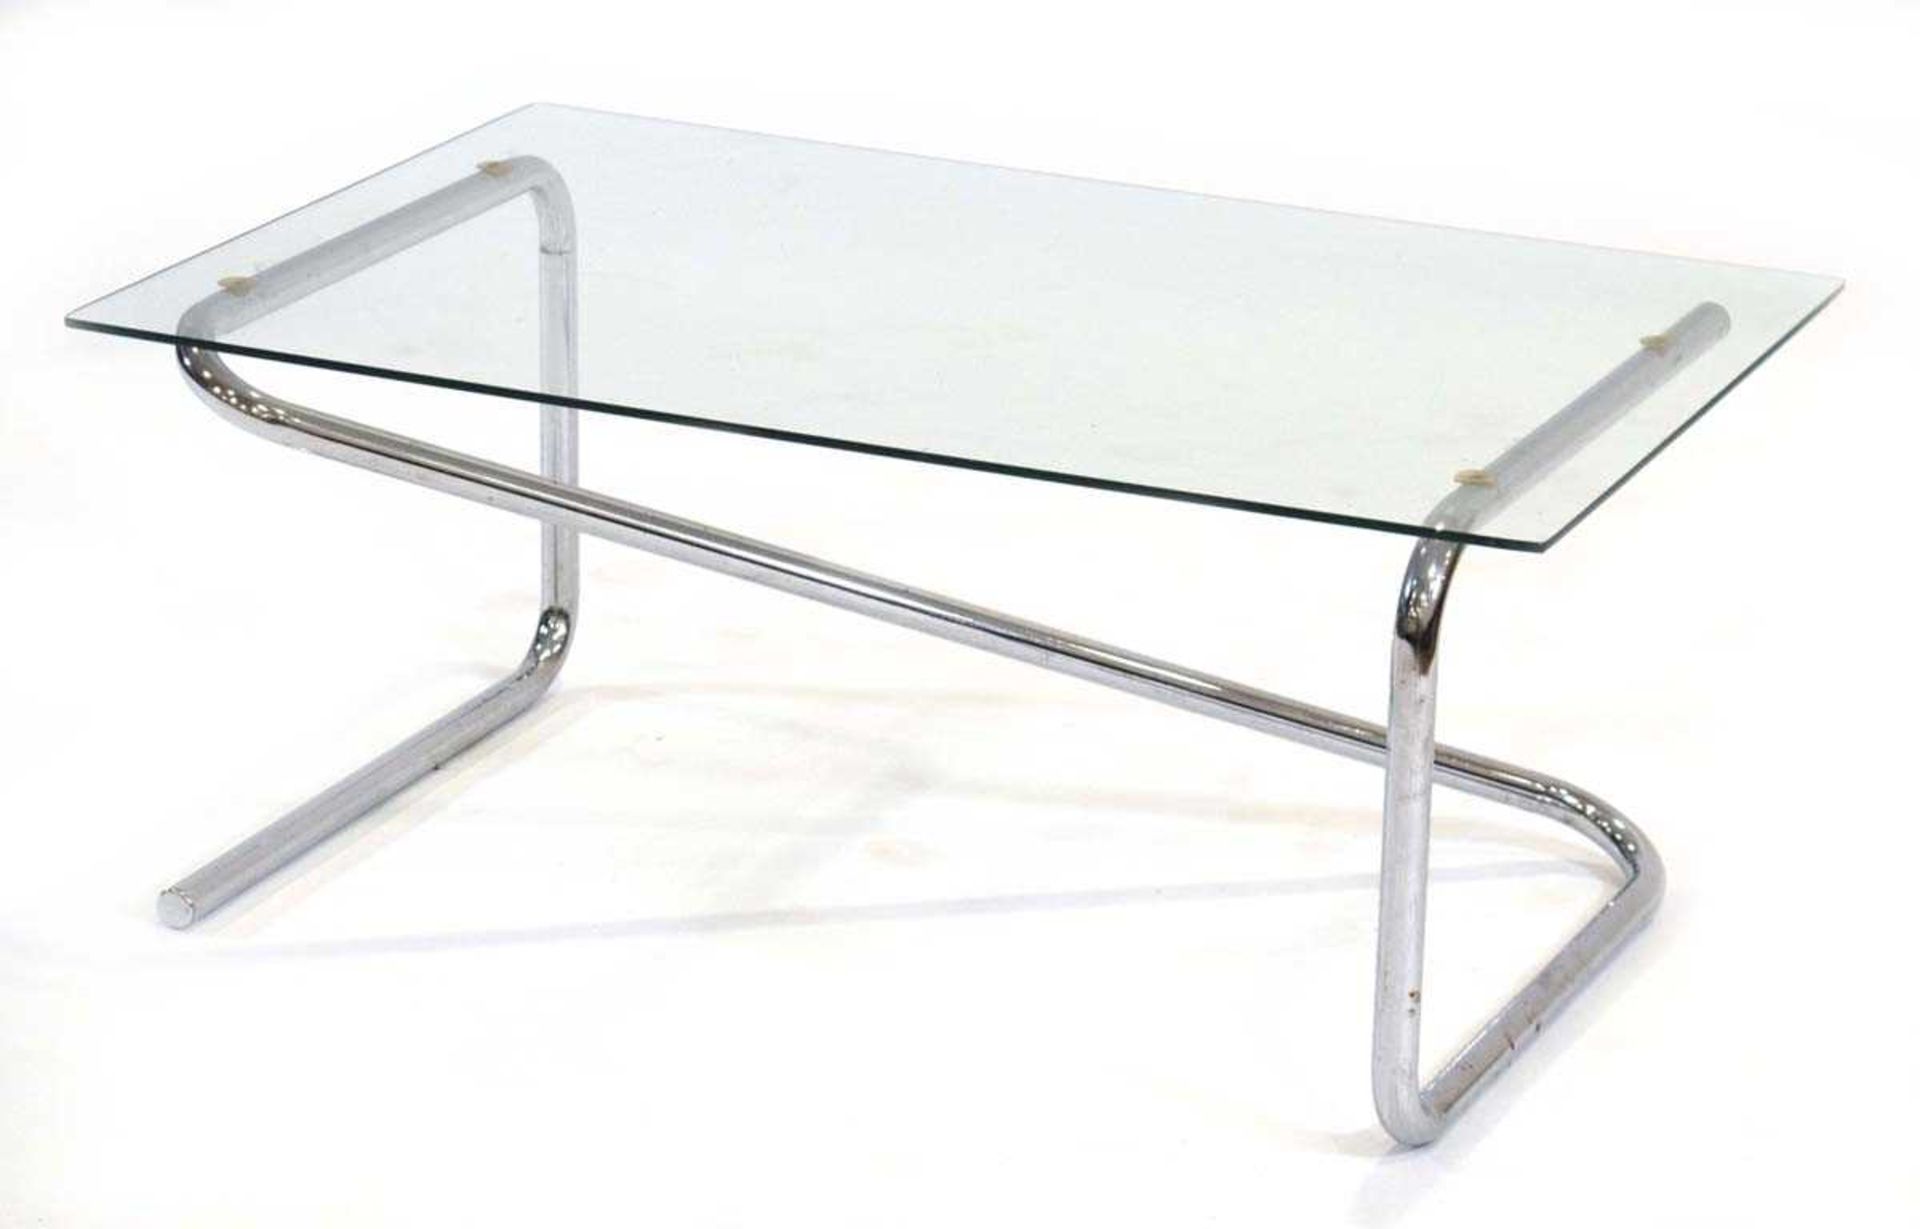 A 1980's chromed tubular coffee table of Z-form with a rectangular glass surface, 89 x 59 cm